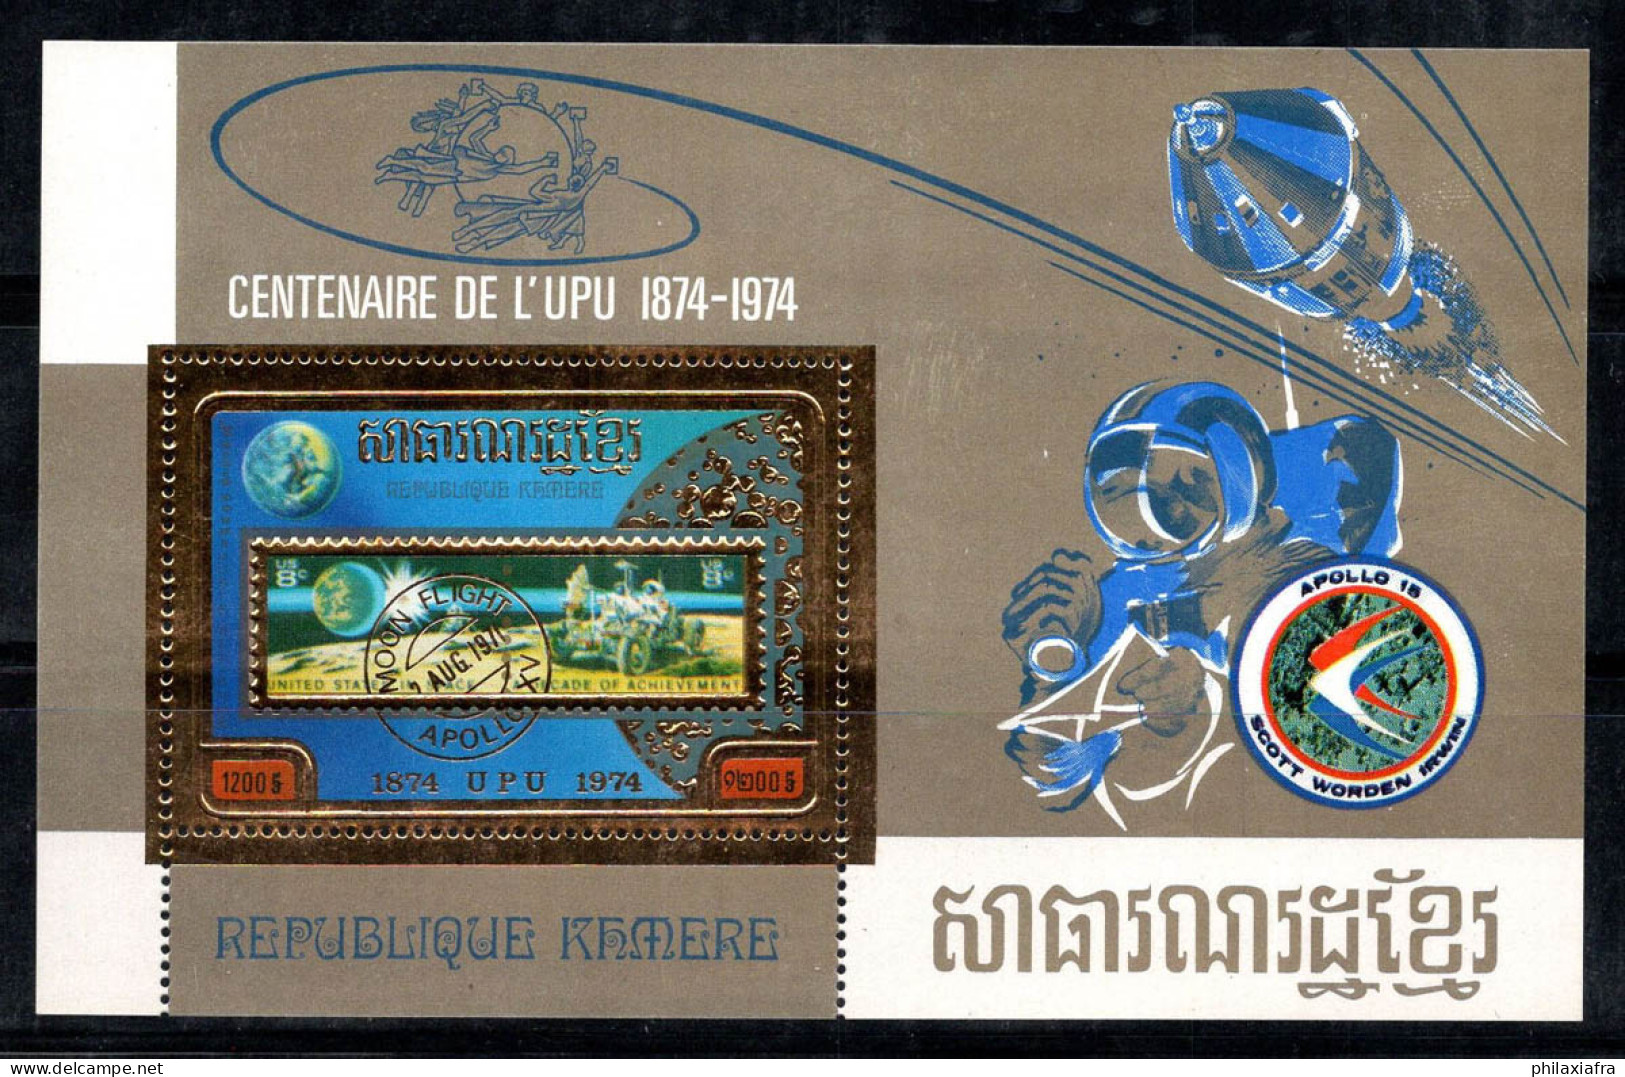 Cambodge 1974 Mi. Bl.60 A Bloc Feuillet 100% Neuf ** 1200 R, UPU,Apollo15 - Cambodge